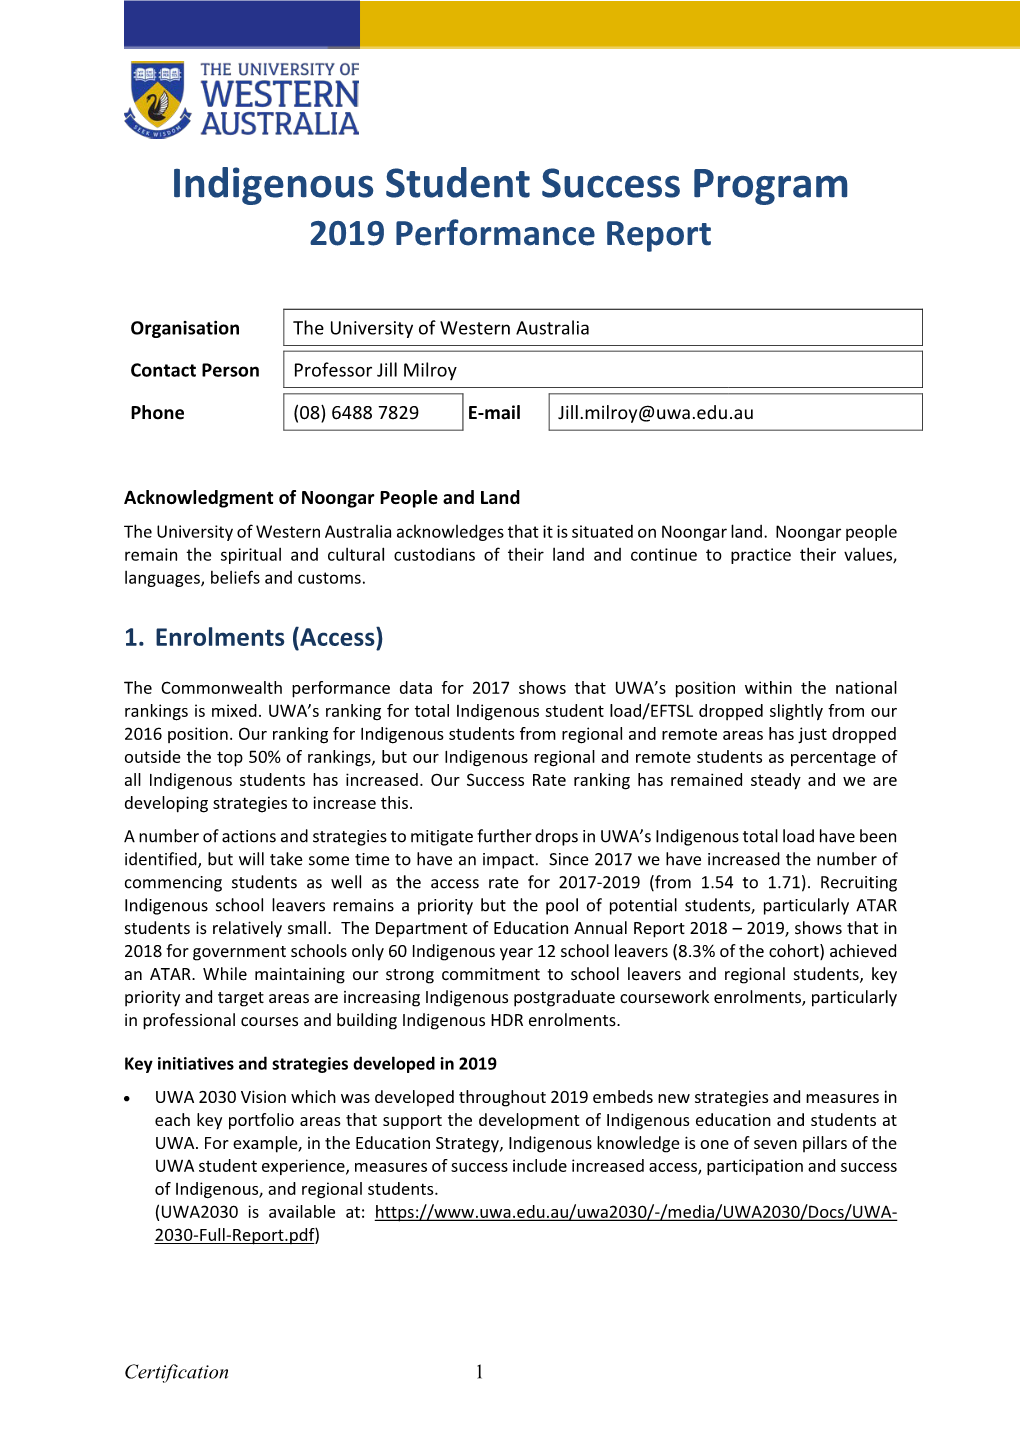 Indigenous Student Success Program 2019 Performance Report